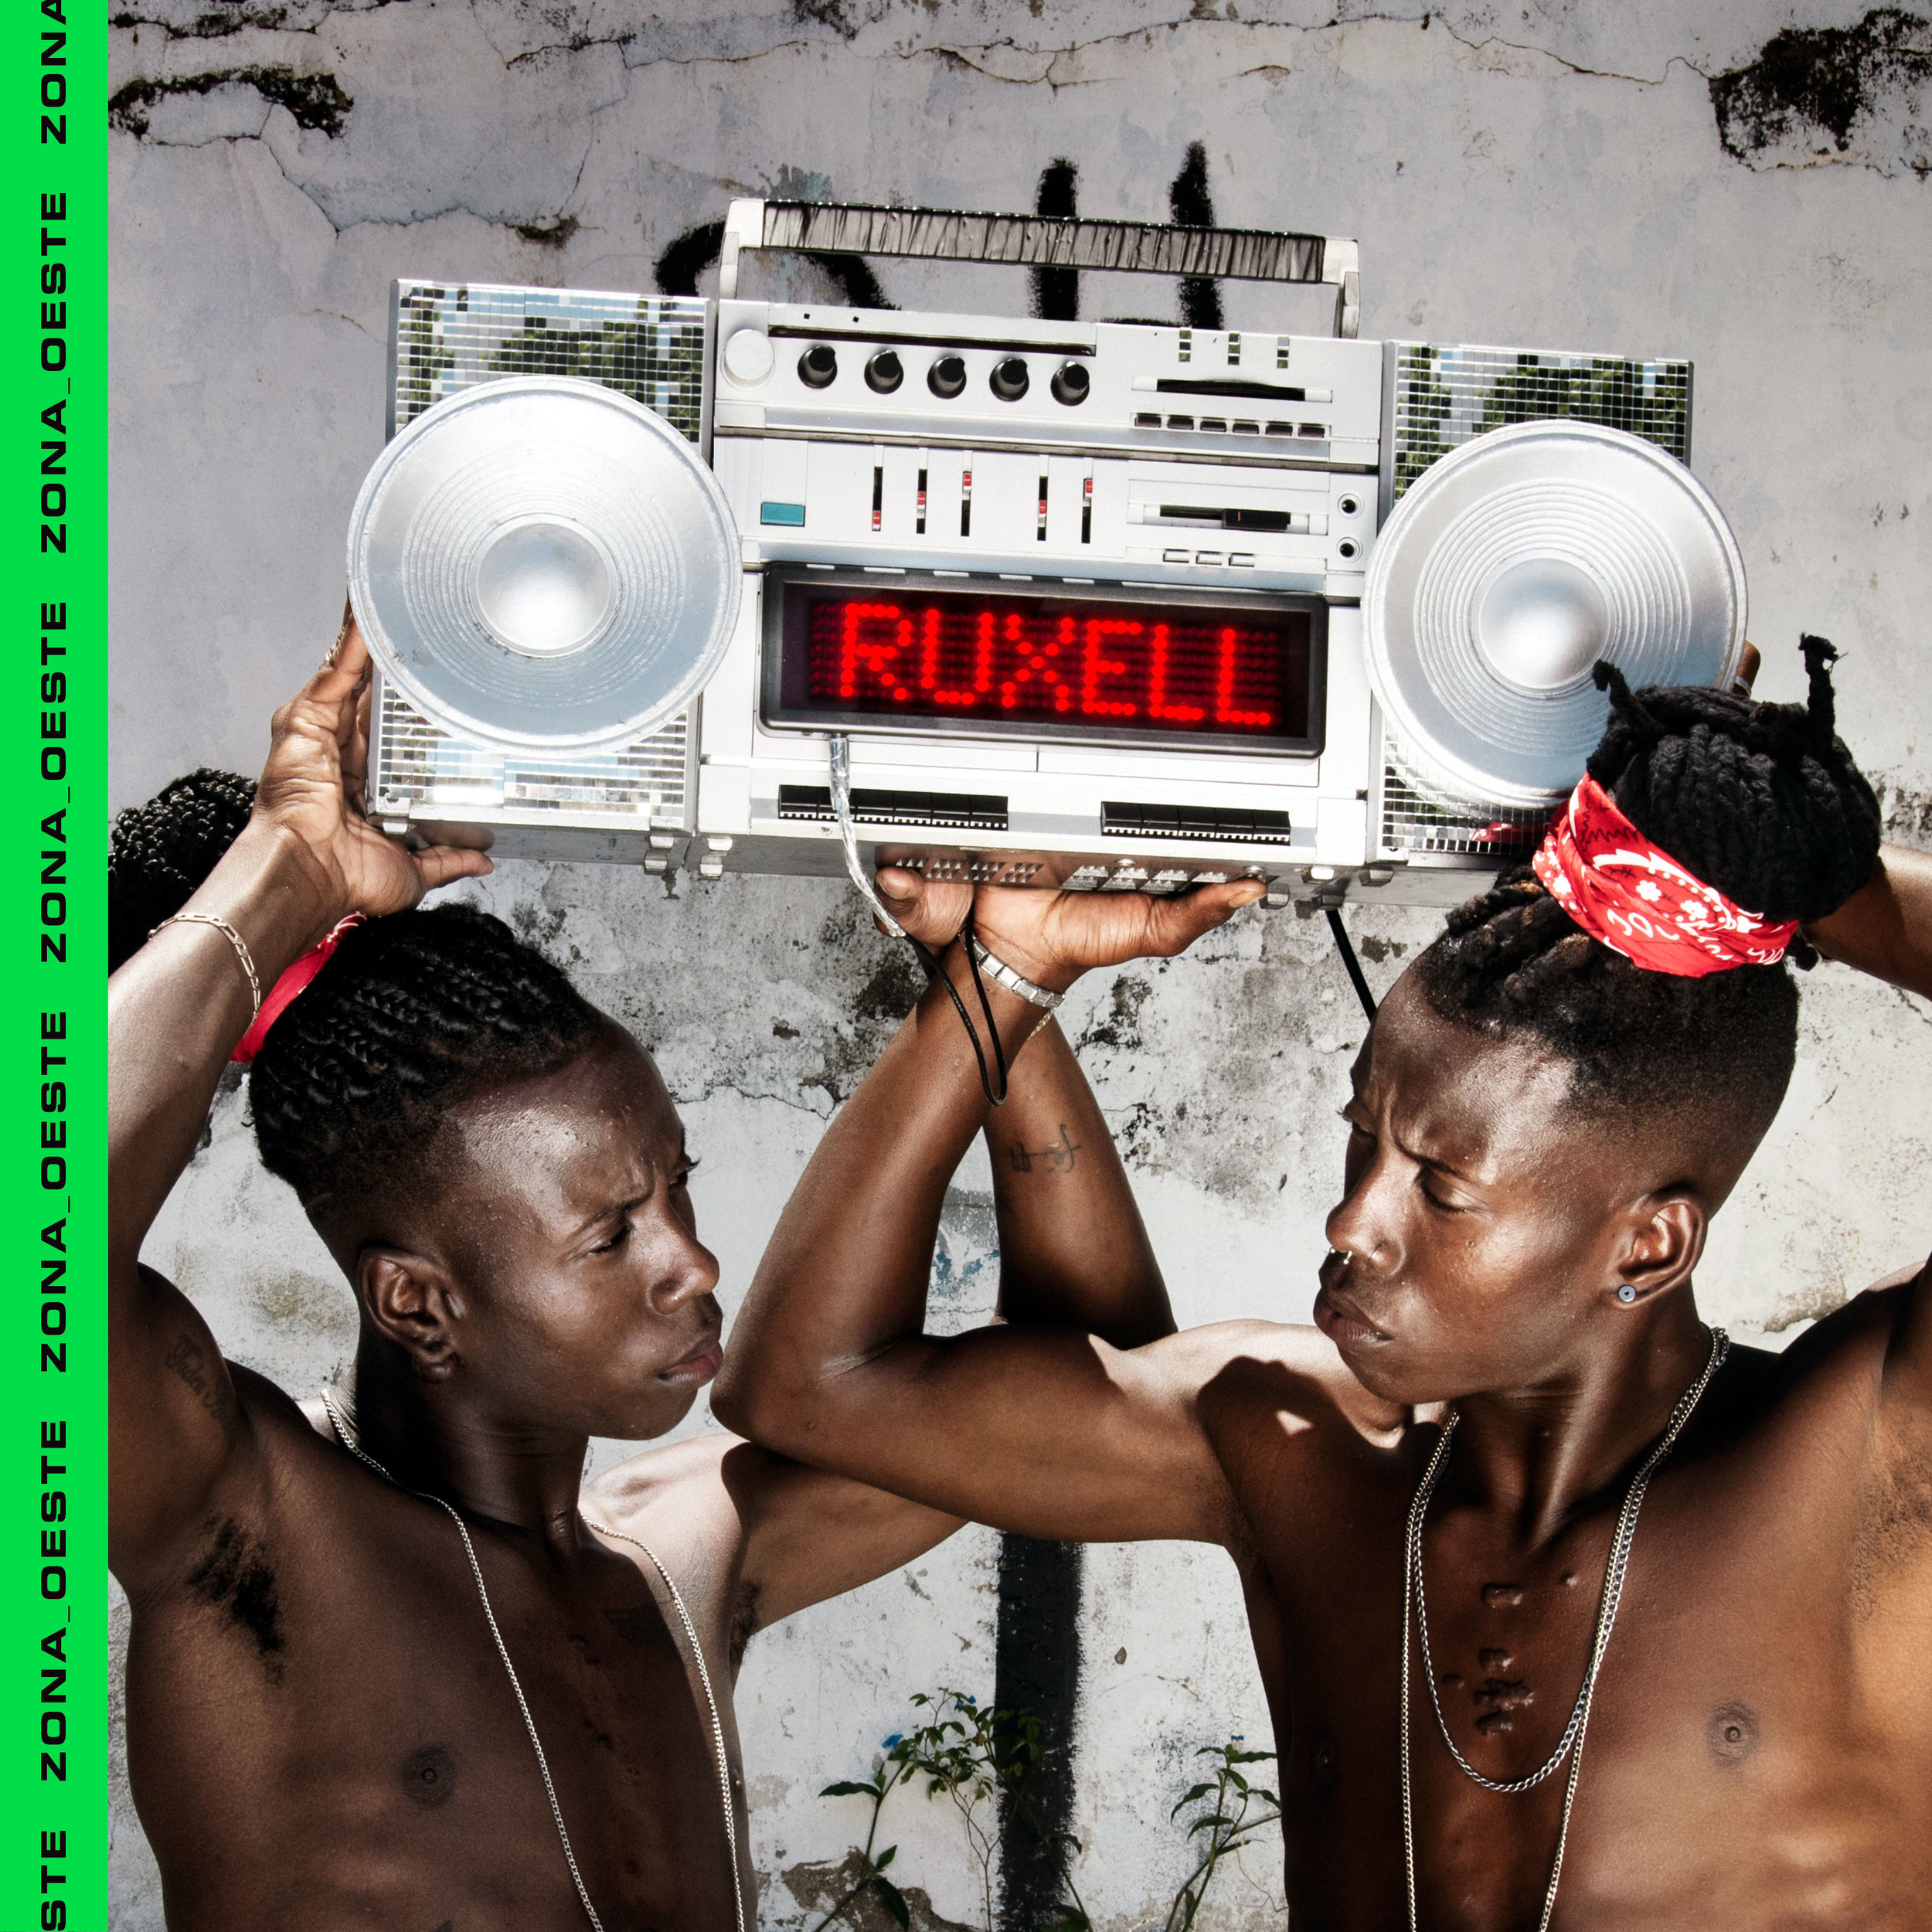  Ruxell - Zona Oeste single cover - photo © Vincent Rosenblatt - Design by Leandro Assis - Twin models : Tarso &amp; Tadeu Oliveira Amancio - Rio de Janeiro 2017 